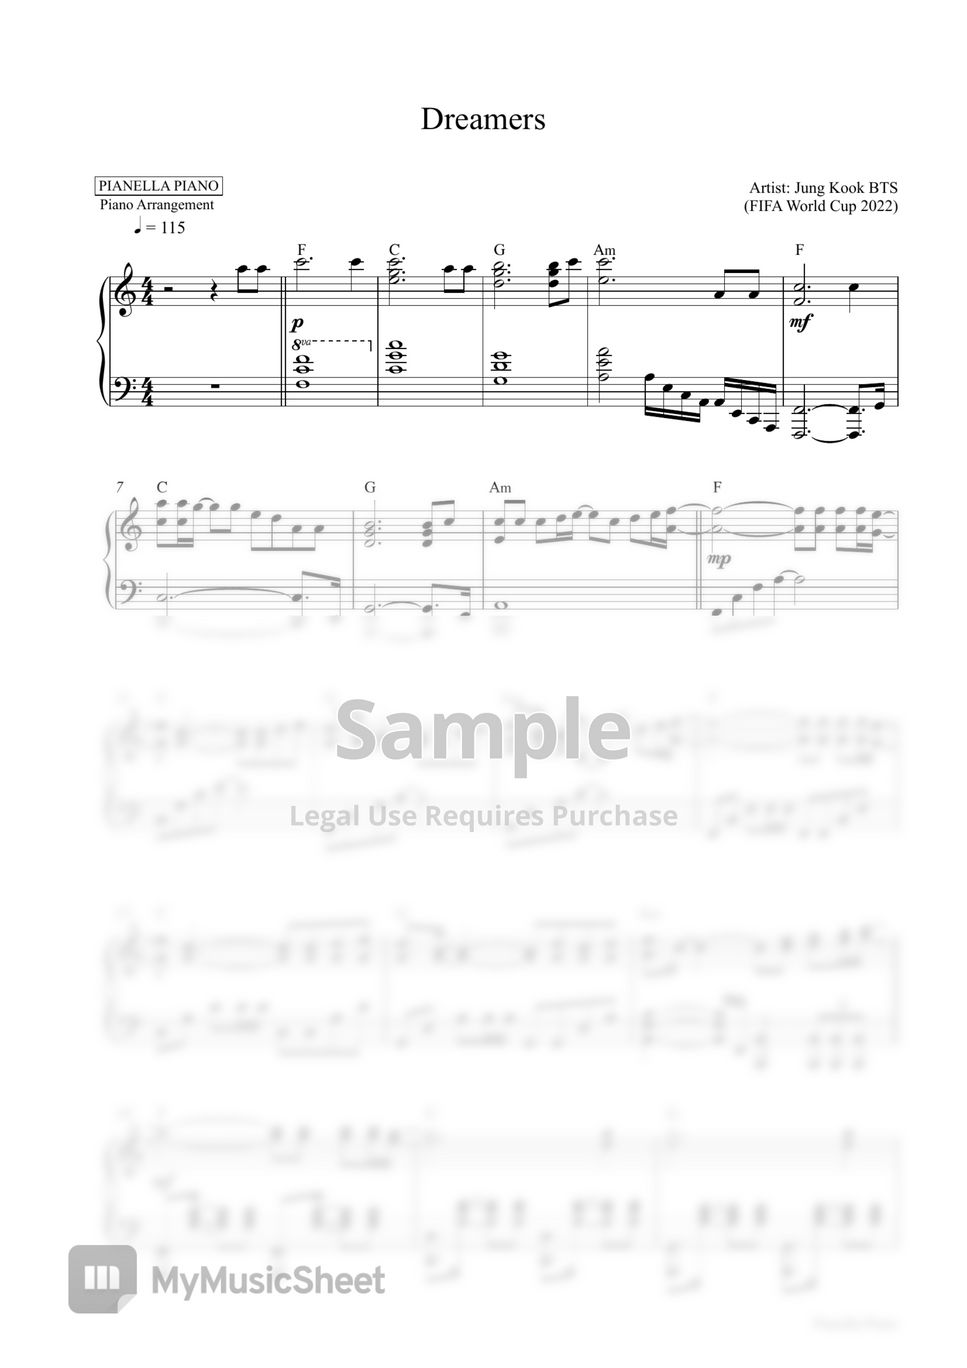 BTS Jung Kook - Dreamers (Piano Sheet) by Pianella Piano